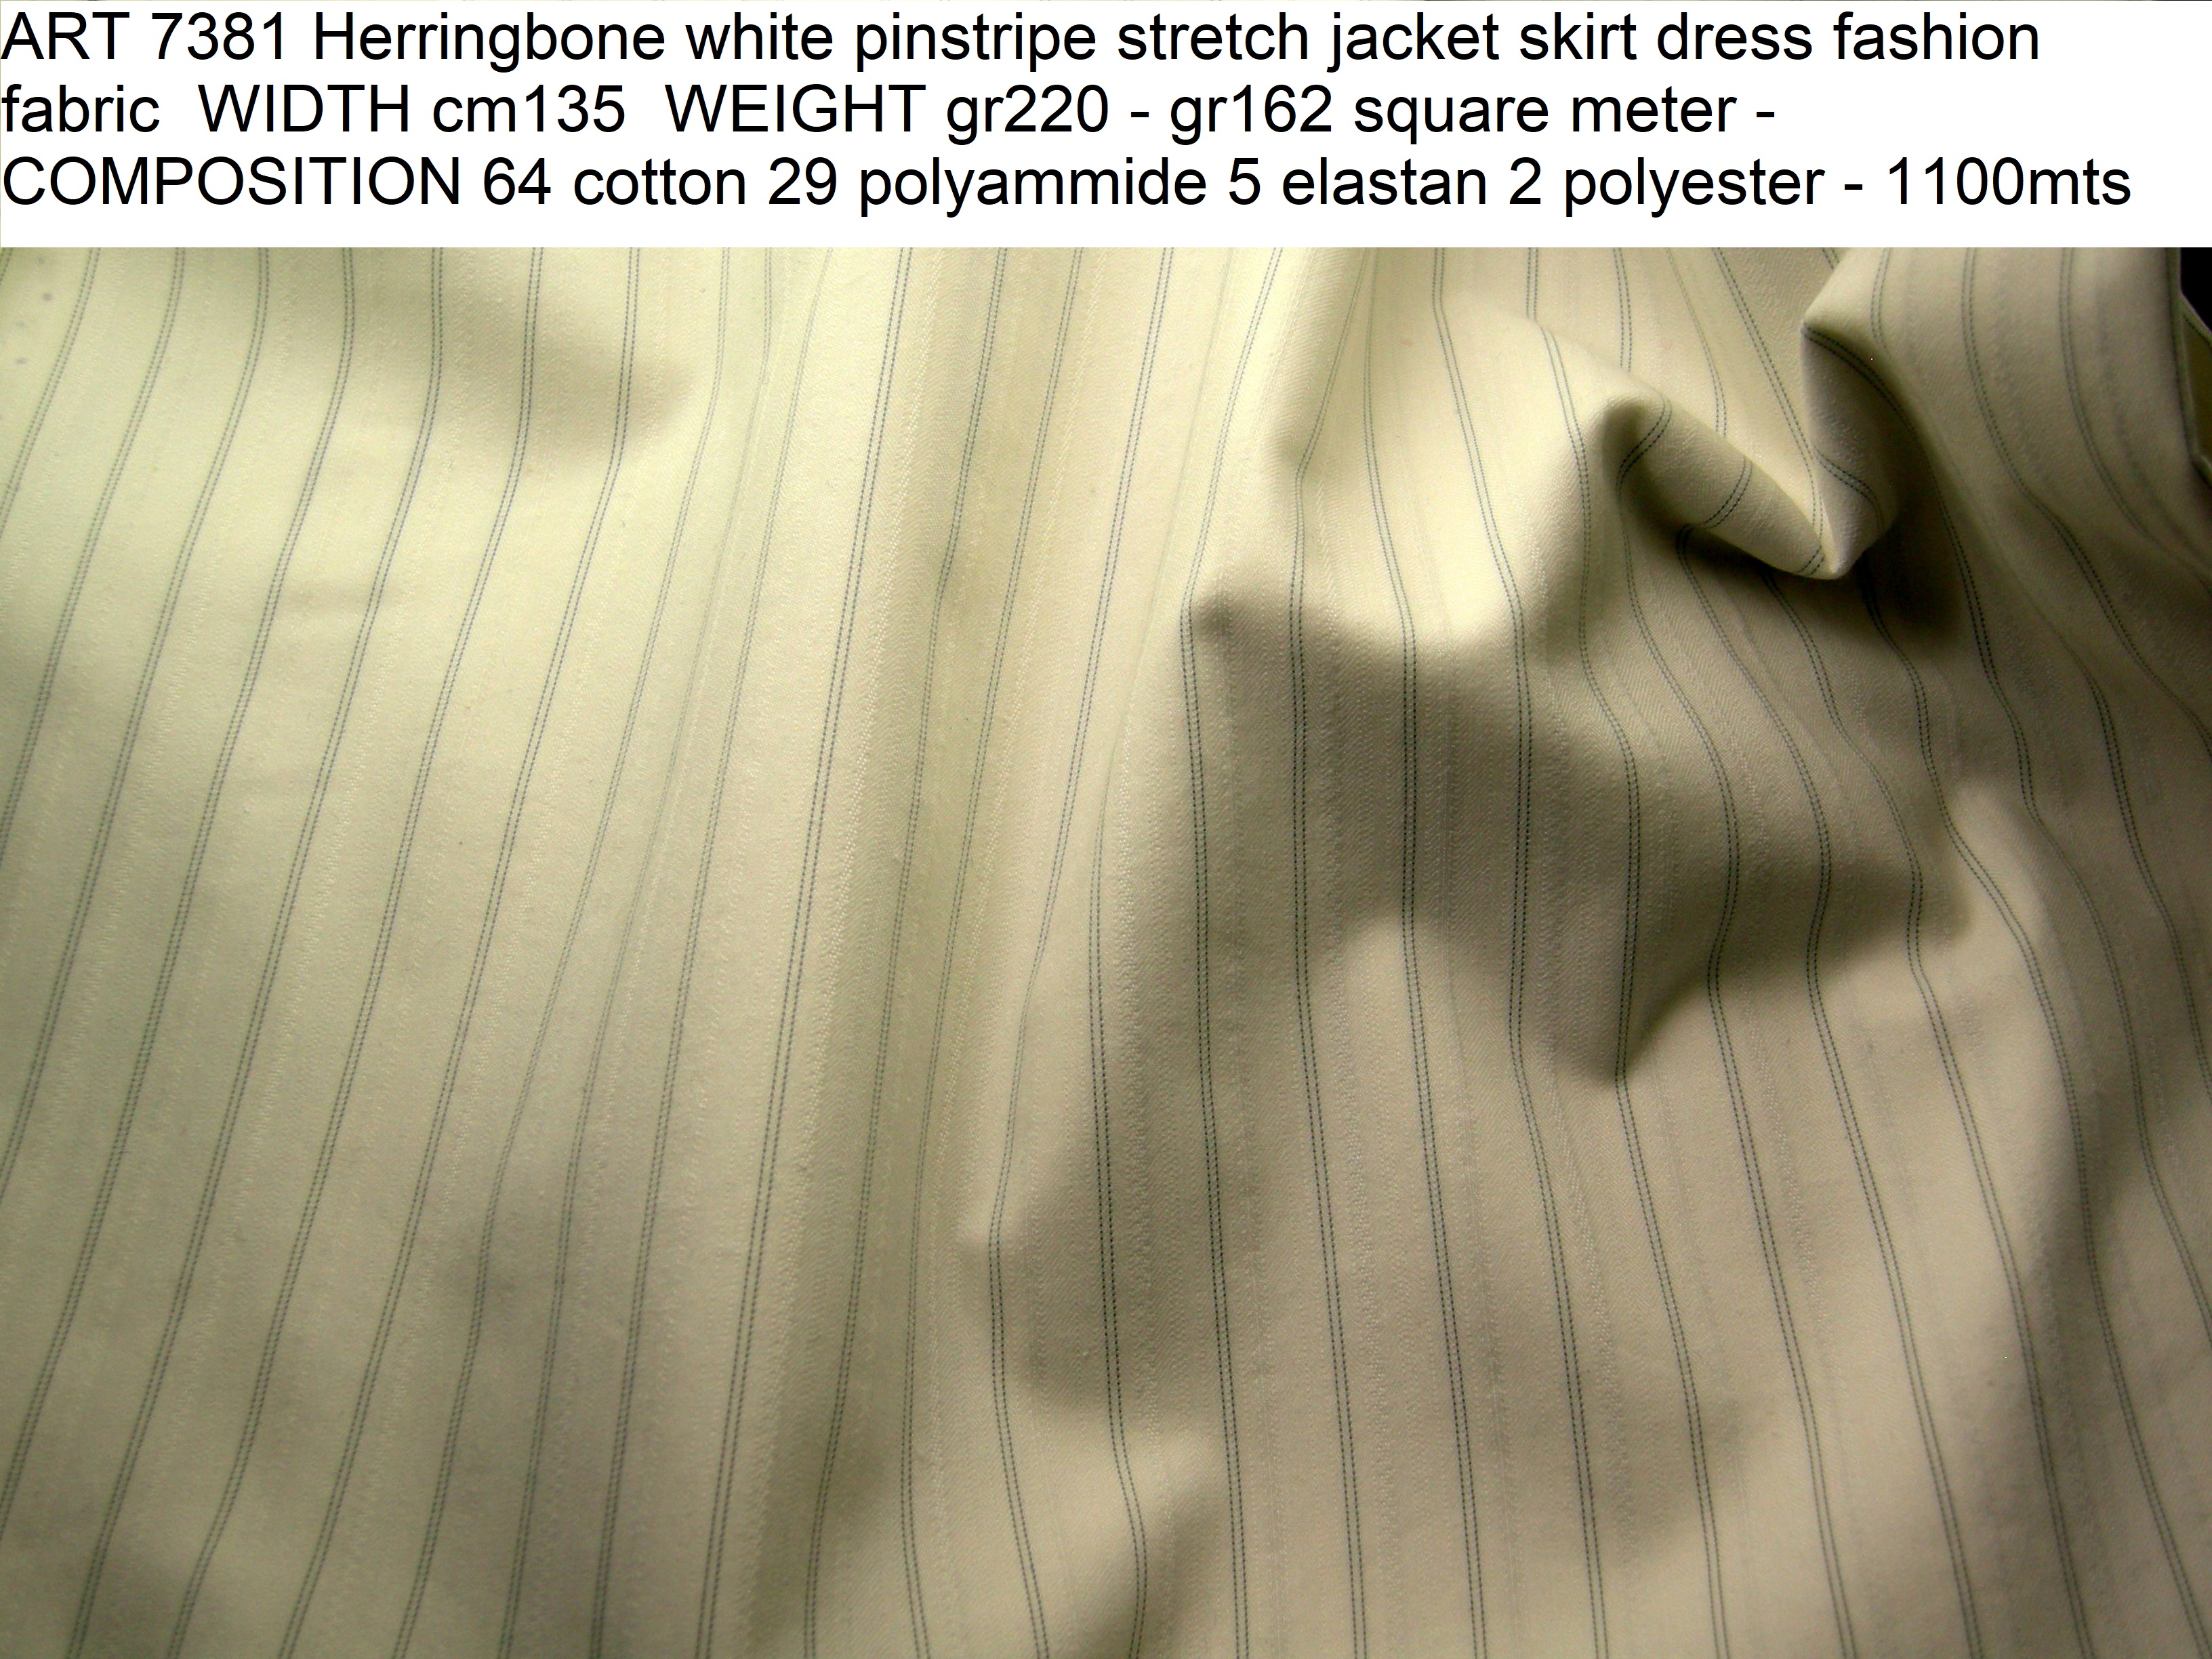 ART 7381 Herringbone white pinstripe stretch jacket skirt dress fashion fabric WIDTH cm135 WEIGHT gr220 - gr162 square meter - COMPOSITION 64 cotton 29 polyammide 5 elastan 2 polyester - 1100mts